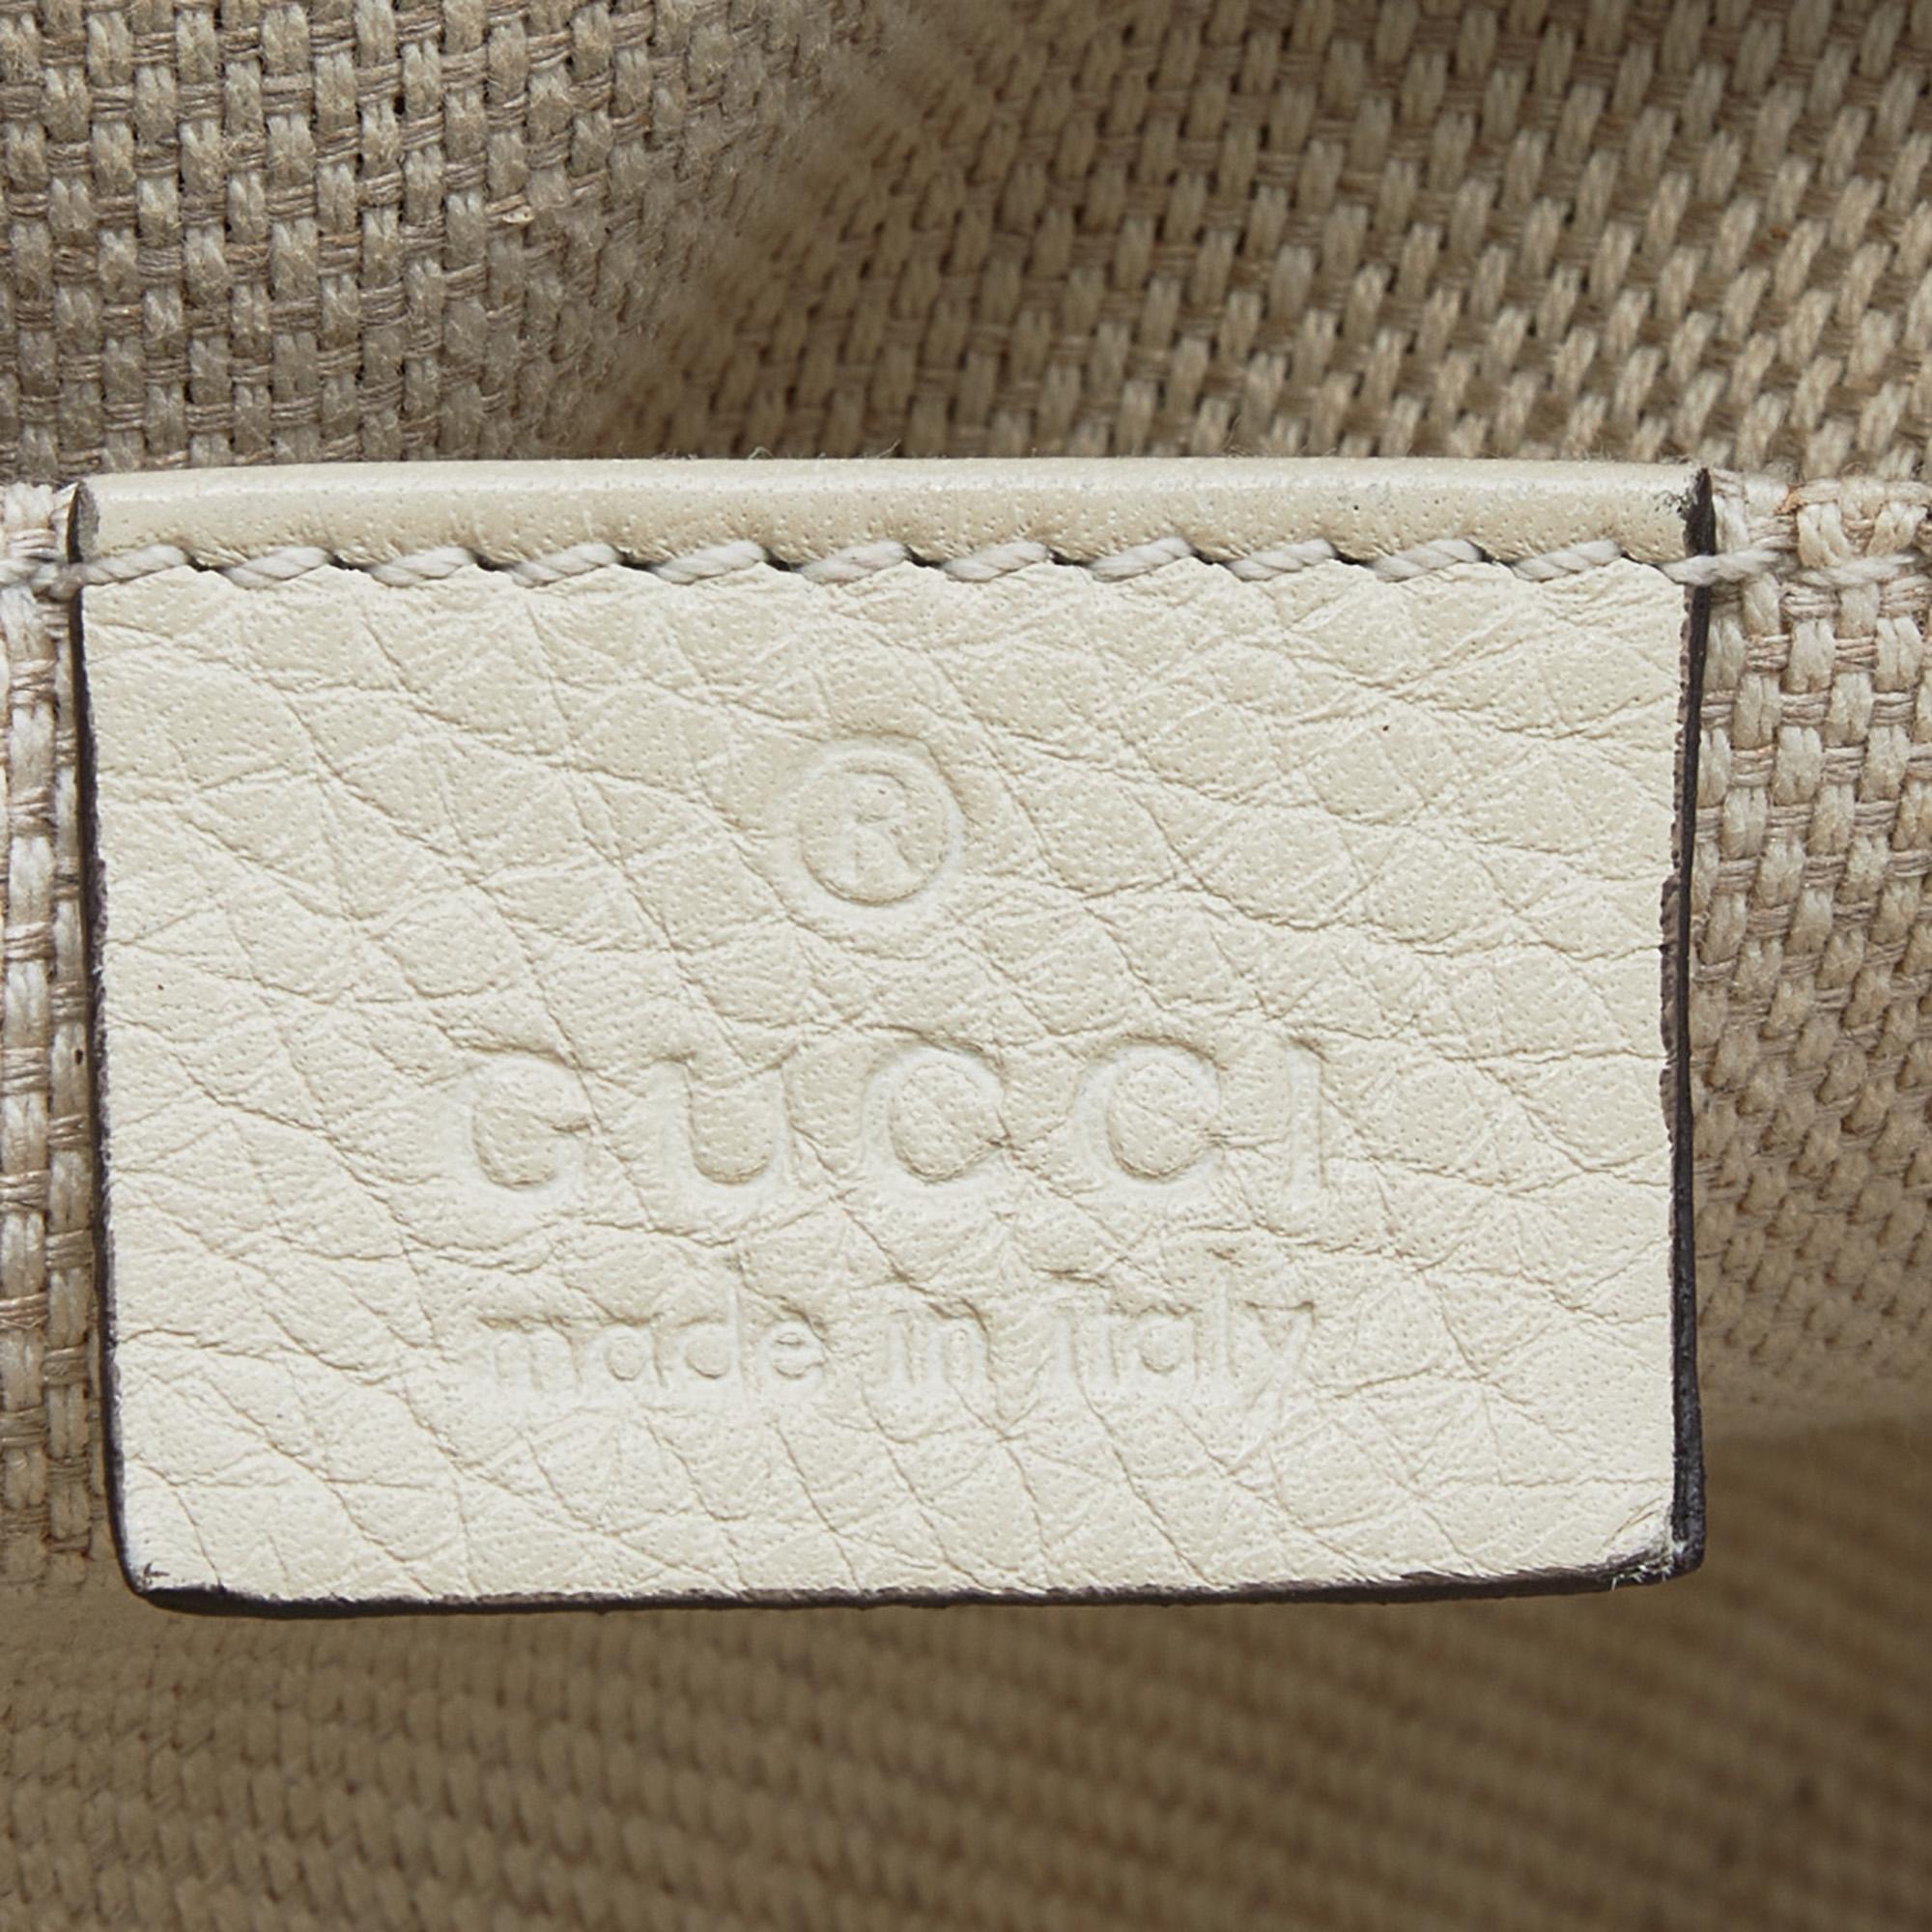 Gucci Cream Leather Small Soho Disco Shoulder Bag 7